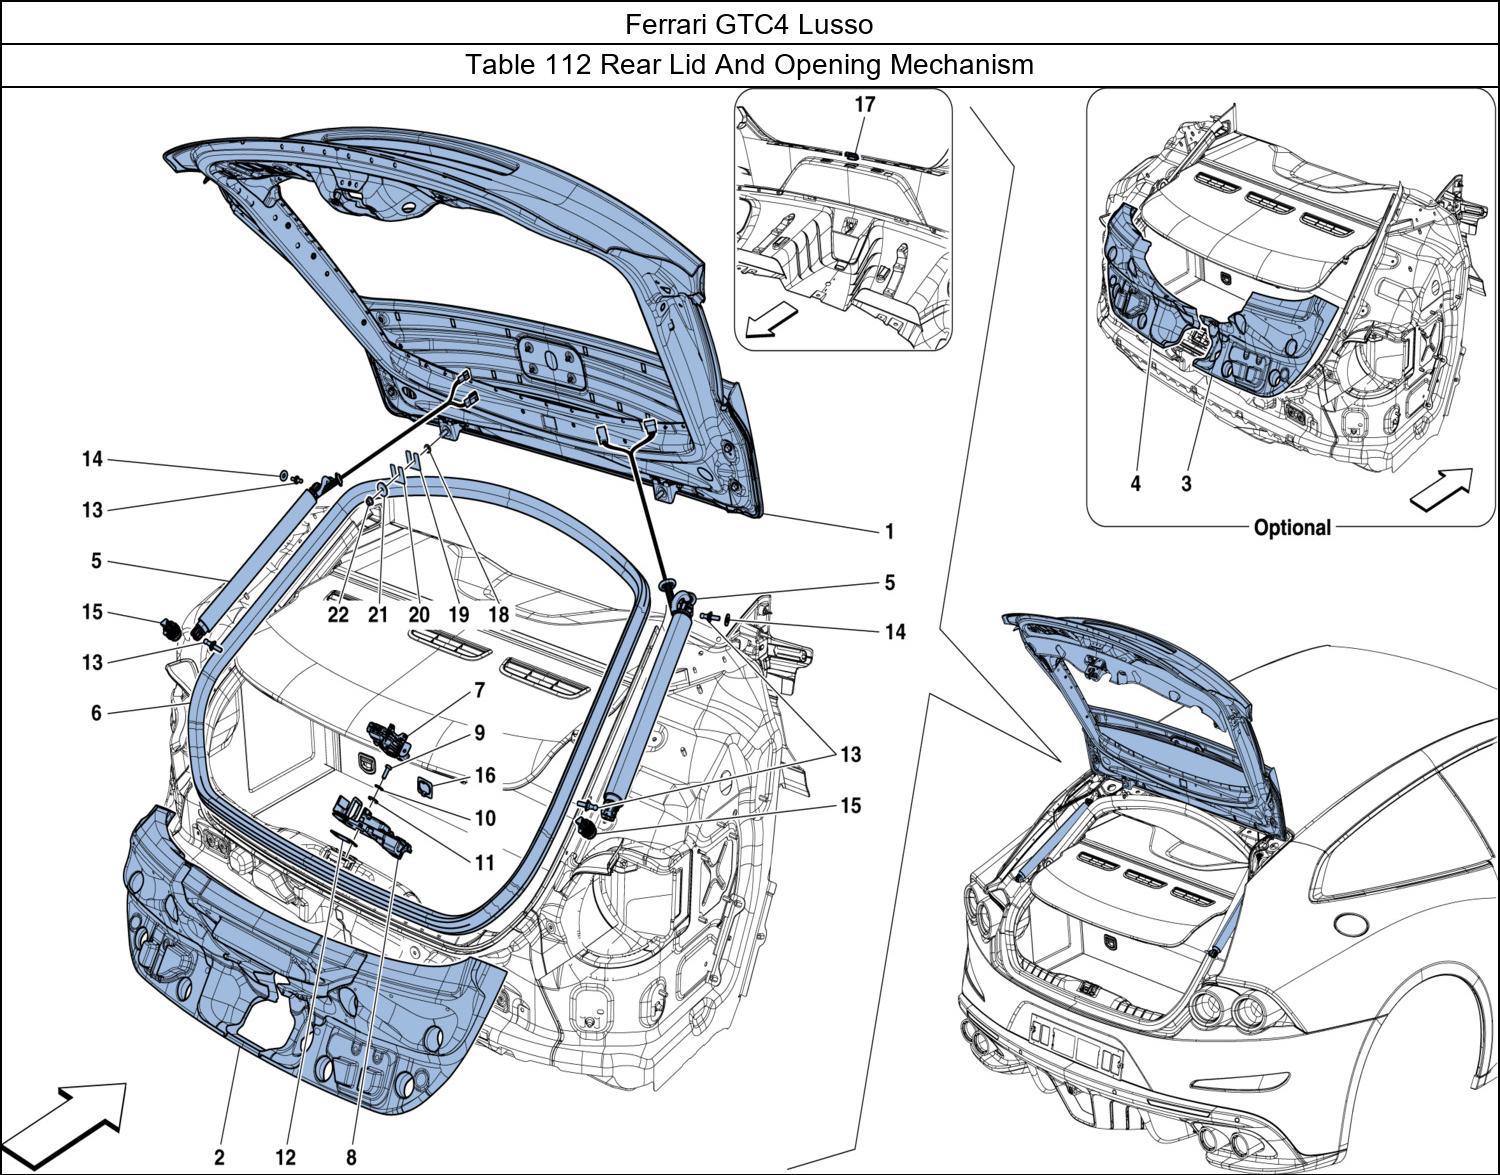 Ferrari Parts Ferrari GTC4 Lusso Table 112 Rear Lid And Opening Mechanism